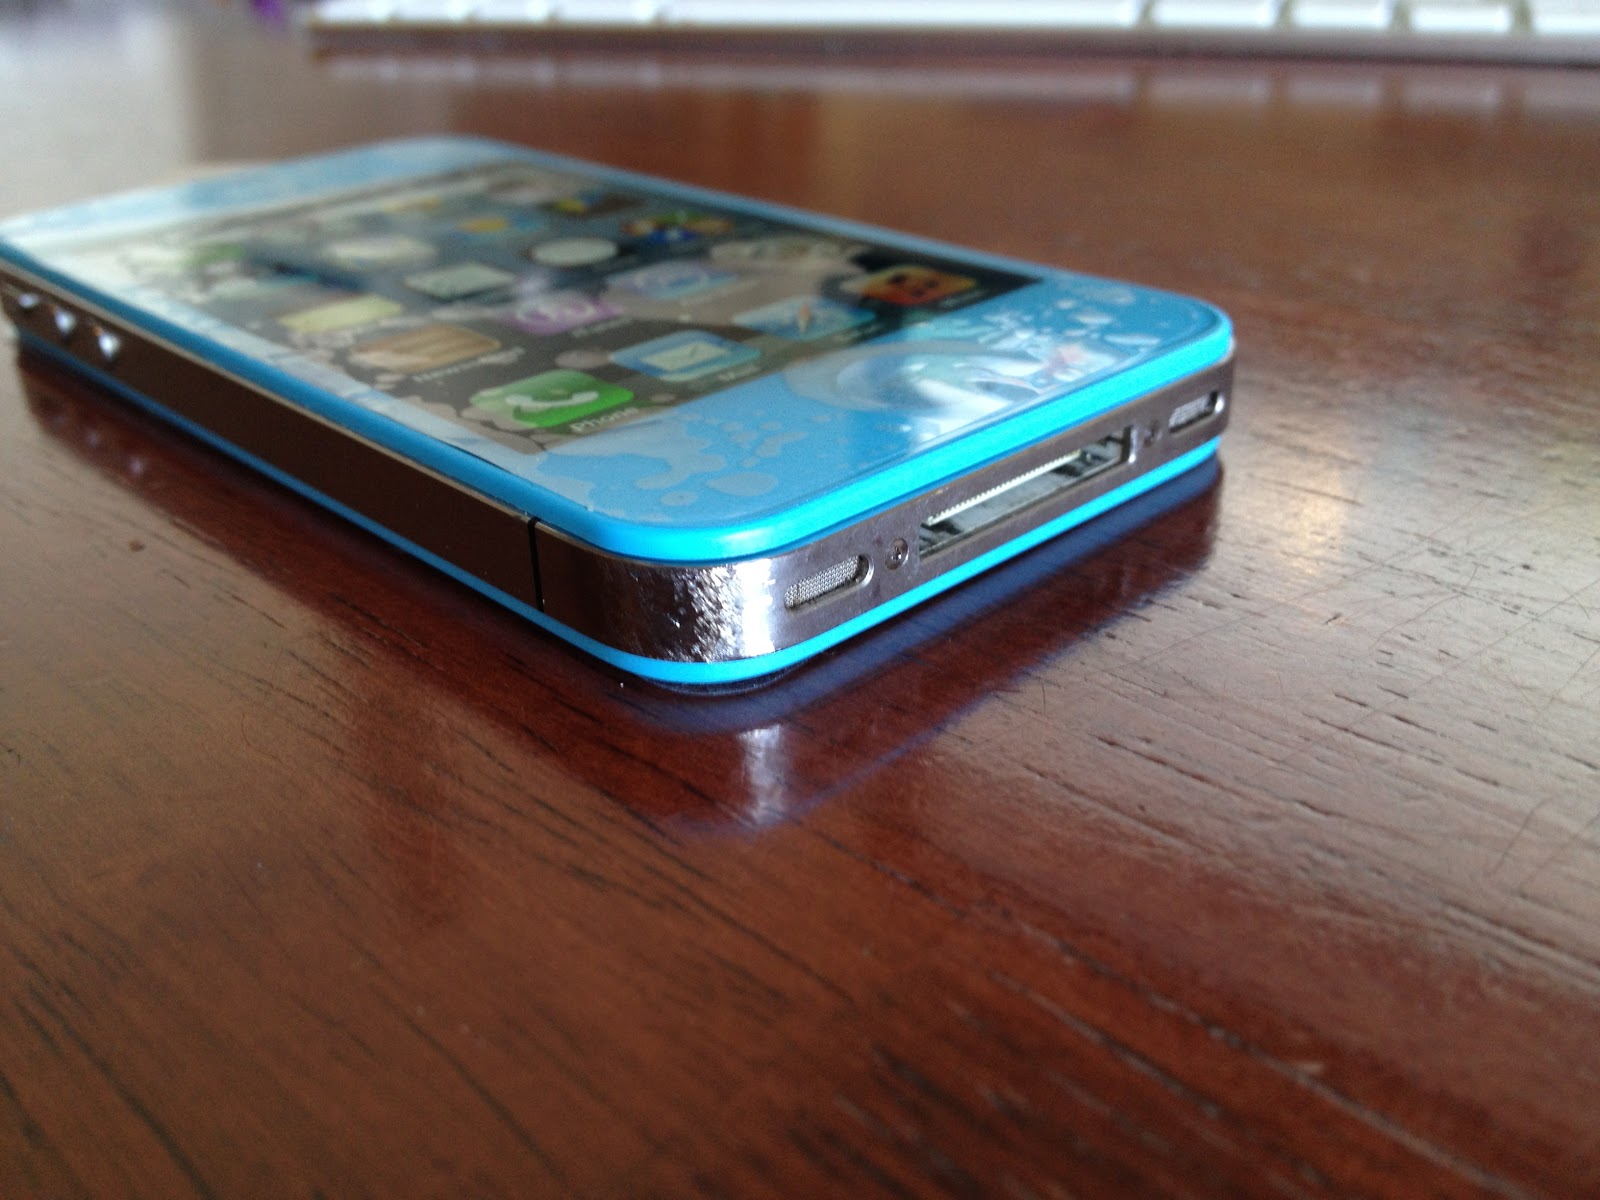 iPhone 4S (Baby Blue) for sale in Lafayette, LA!